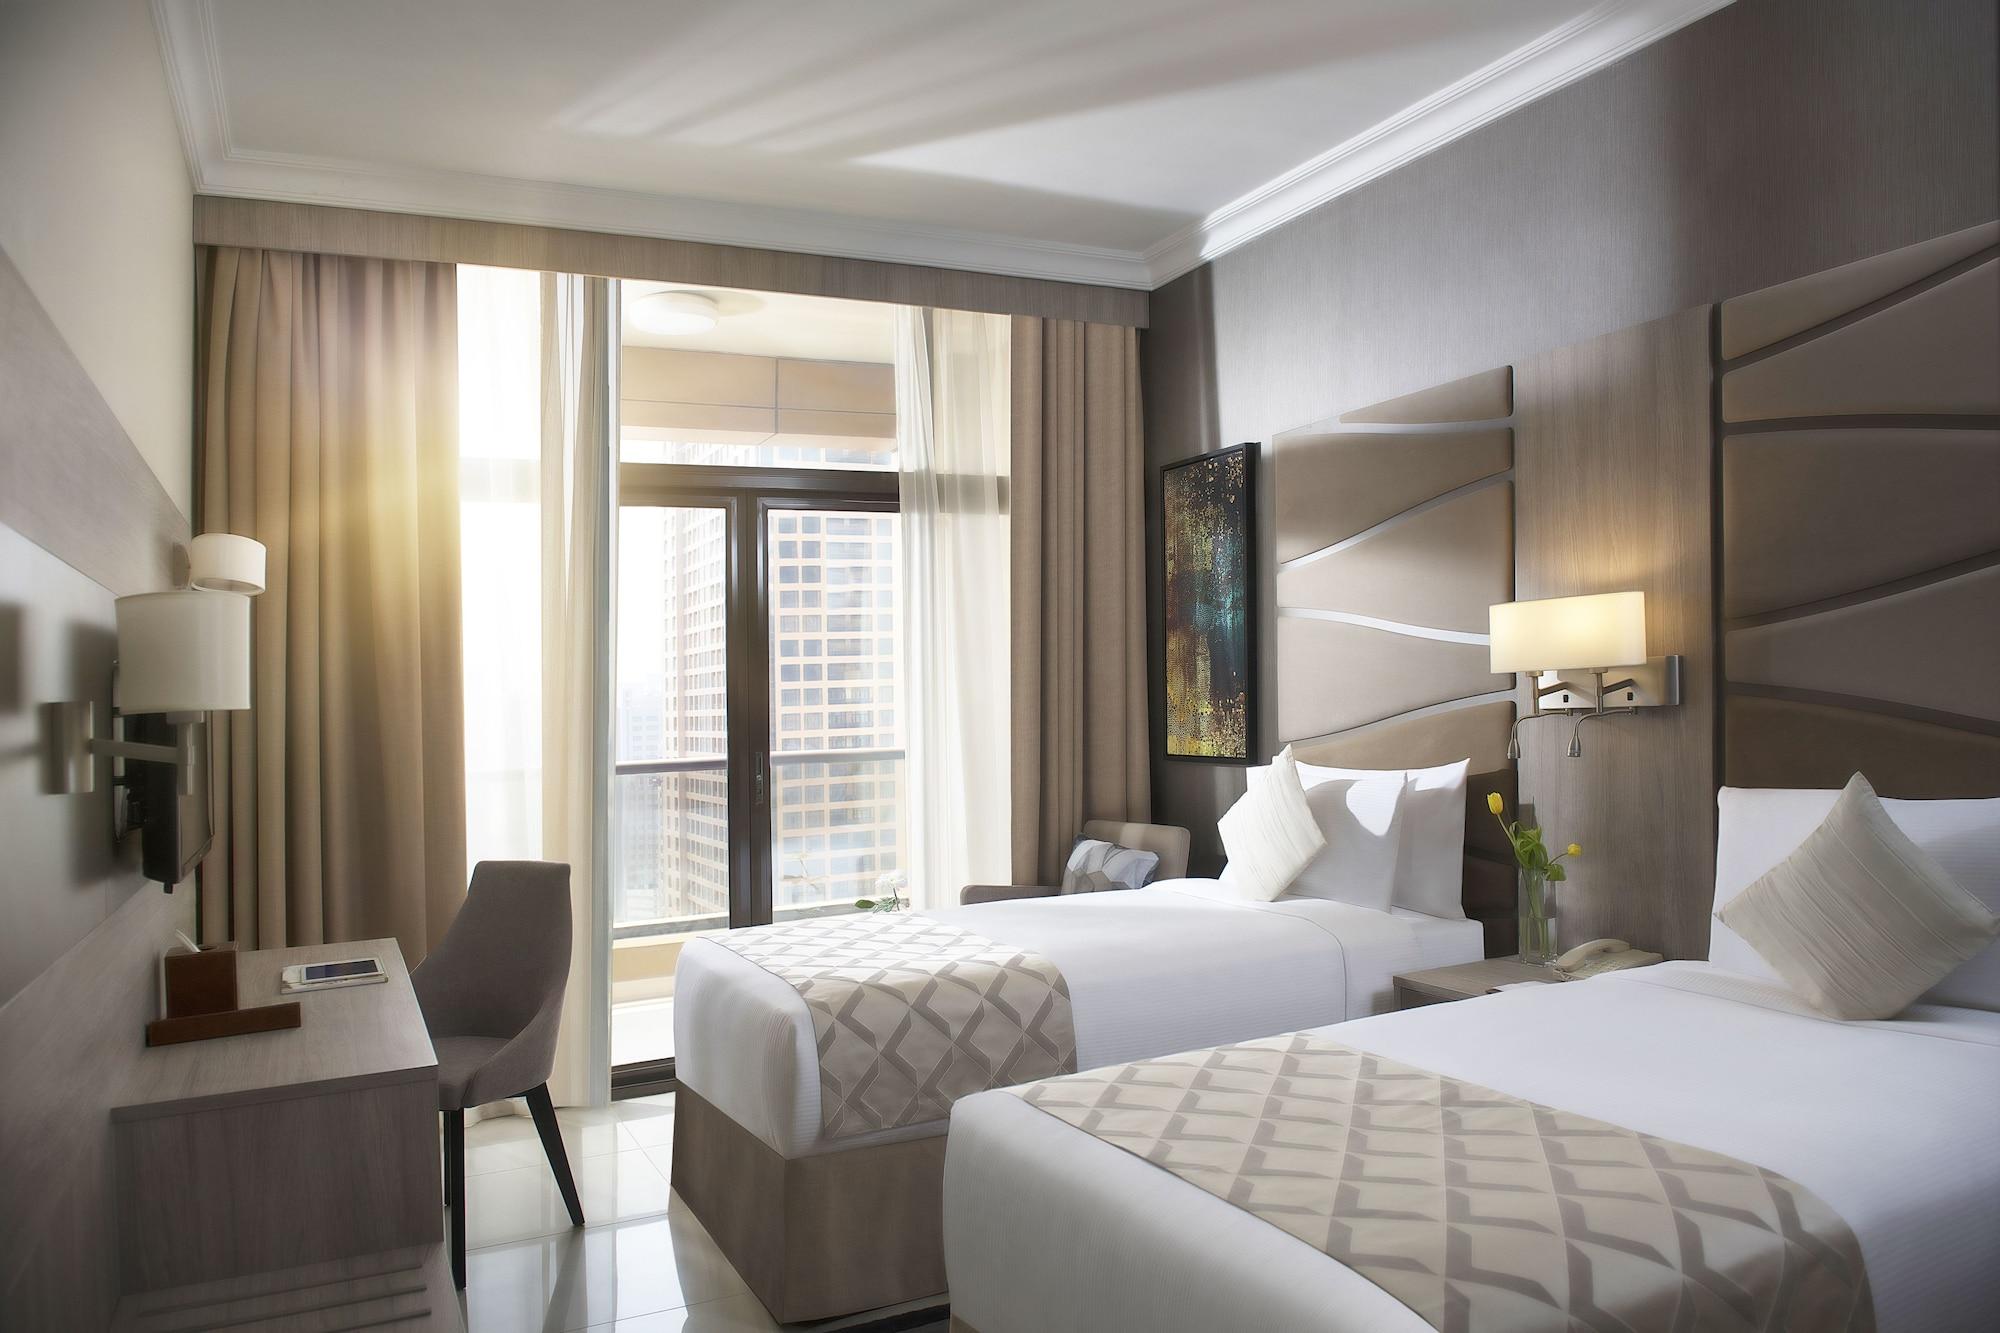 Two отель. Two Seasons Hotel Apartments Dubai. Mercure Hotel Apartments Dubai Barsha. Two Seasons Hotel & Apart (ex. Gloria Hotel) 4*. Two Seasons Hotel & Hotel Apartment 4*.